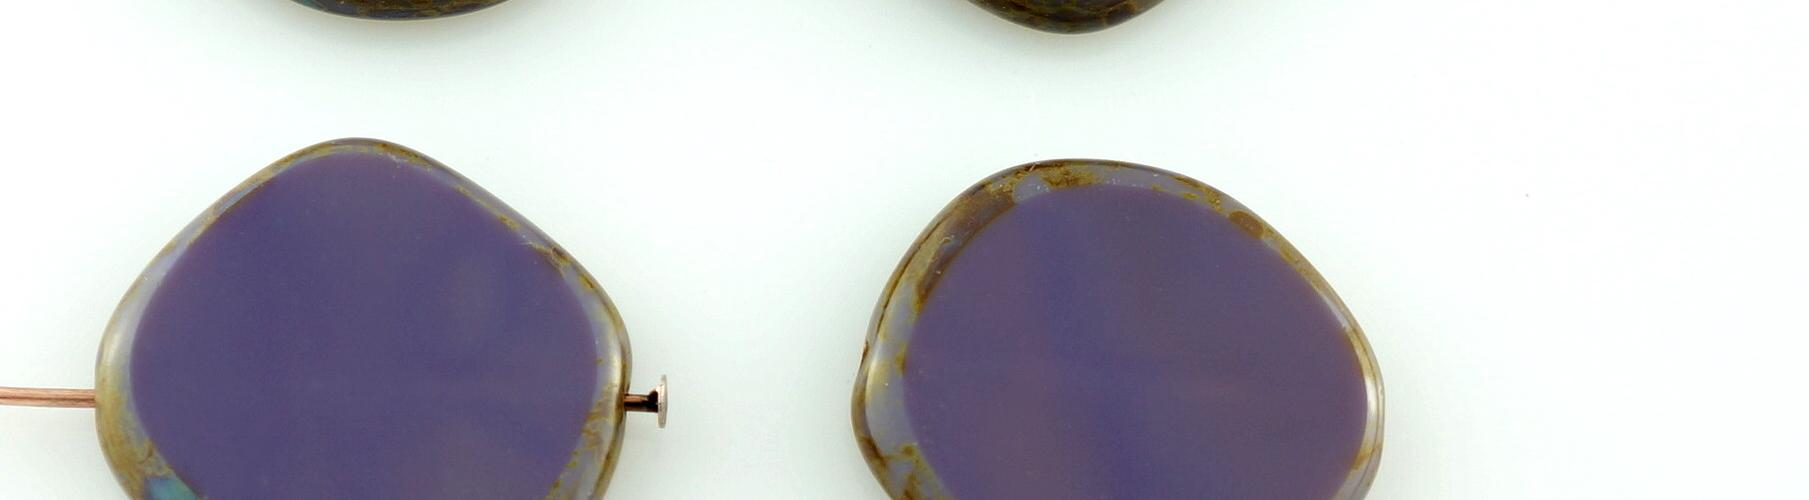 2pc 15mm Czech Table-Cut Square Vintage-Style Window Beads, Violet